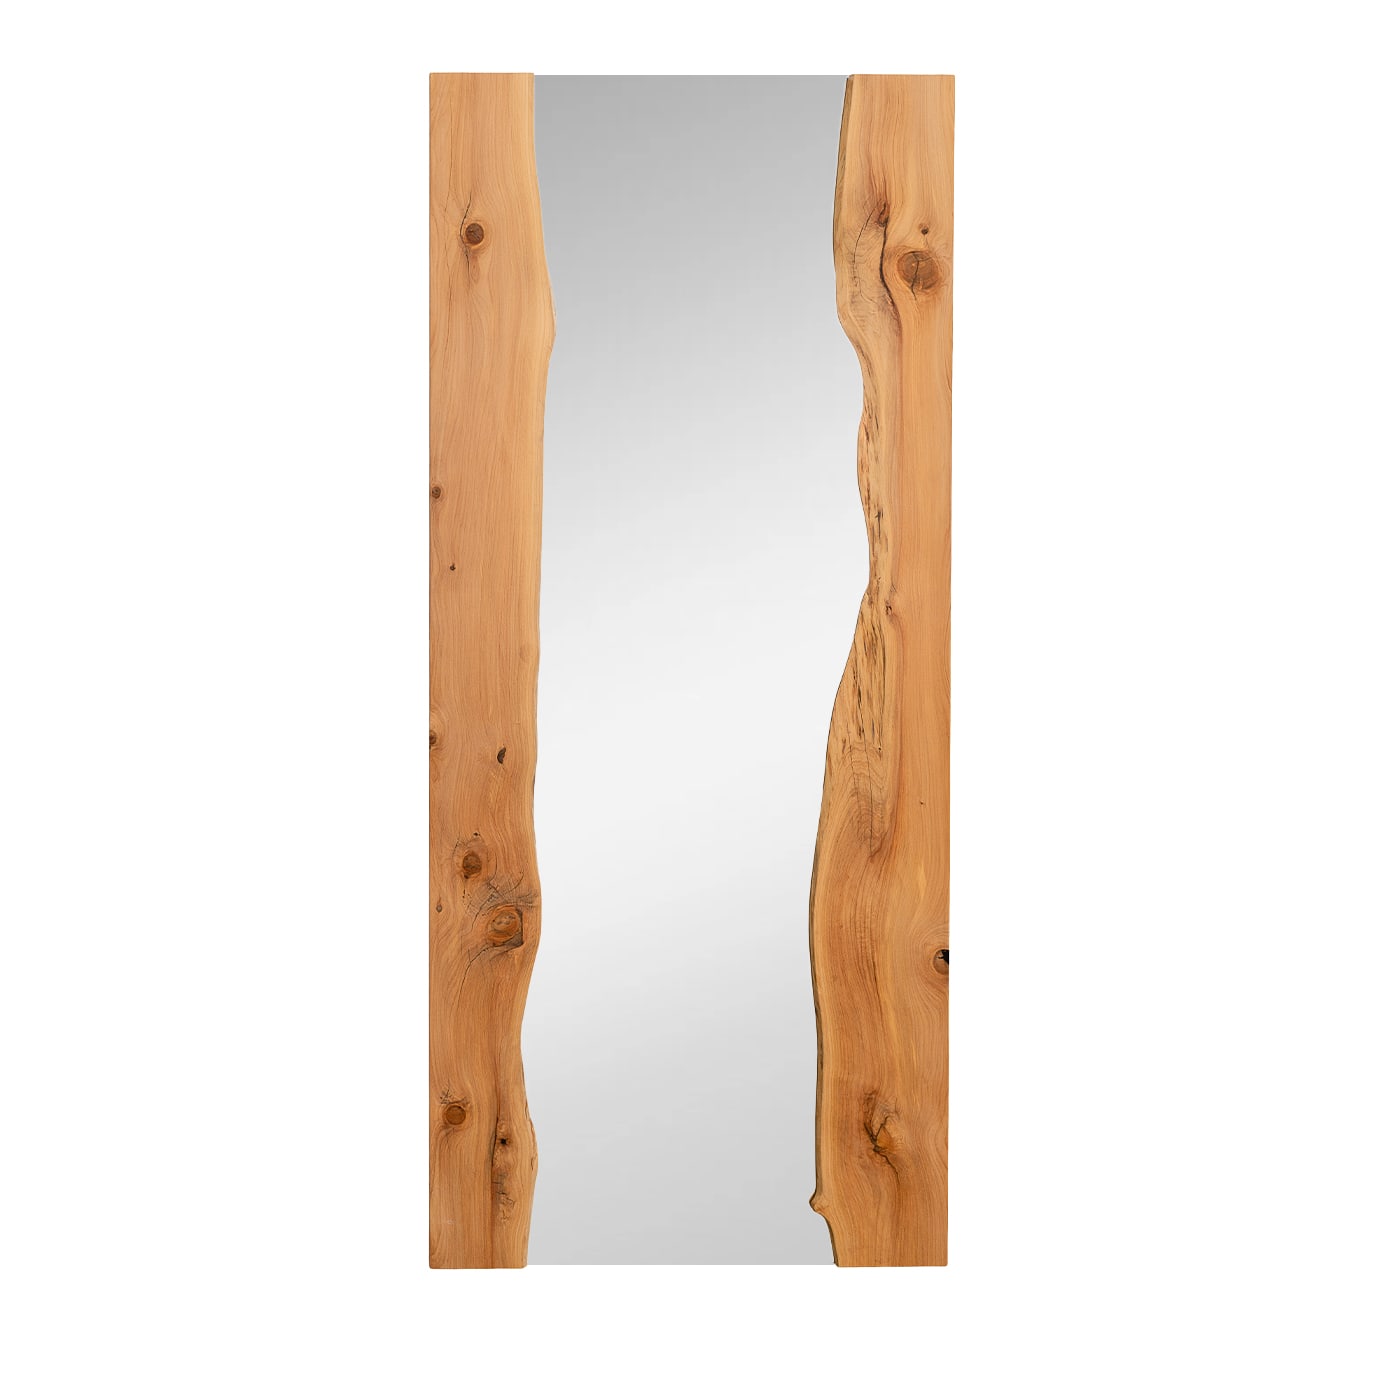 Taxus Floor Mirror - Slow Wood by Gianni Cantarutti